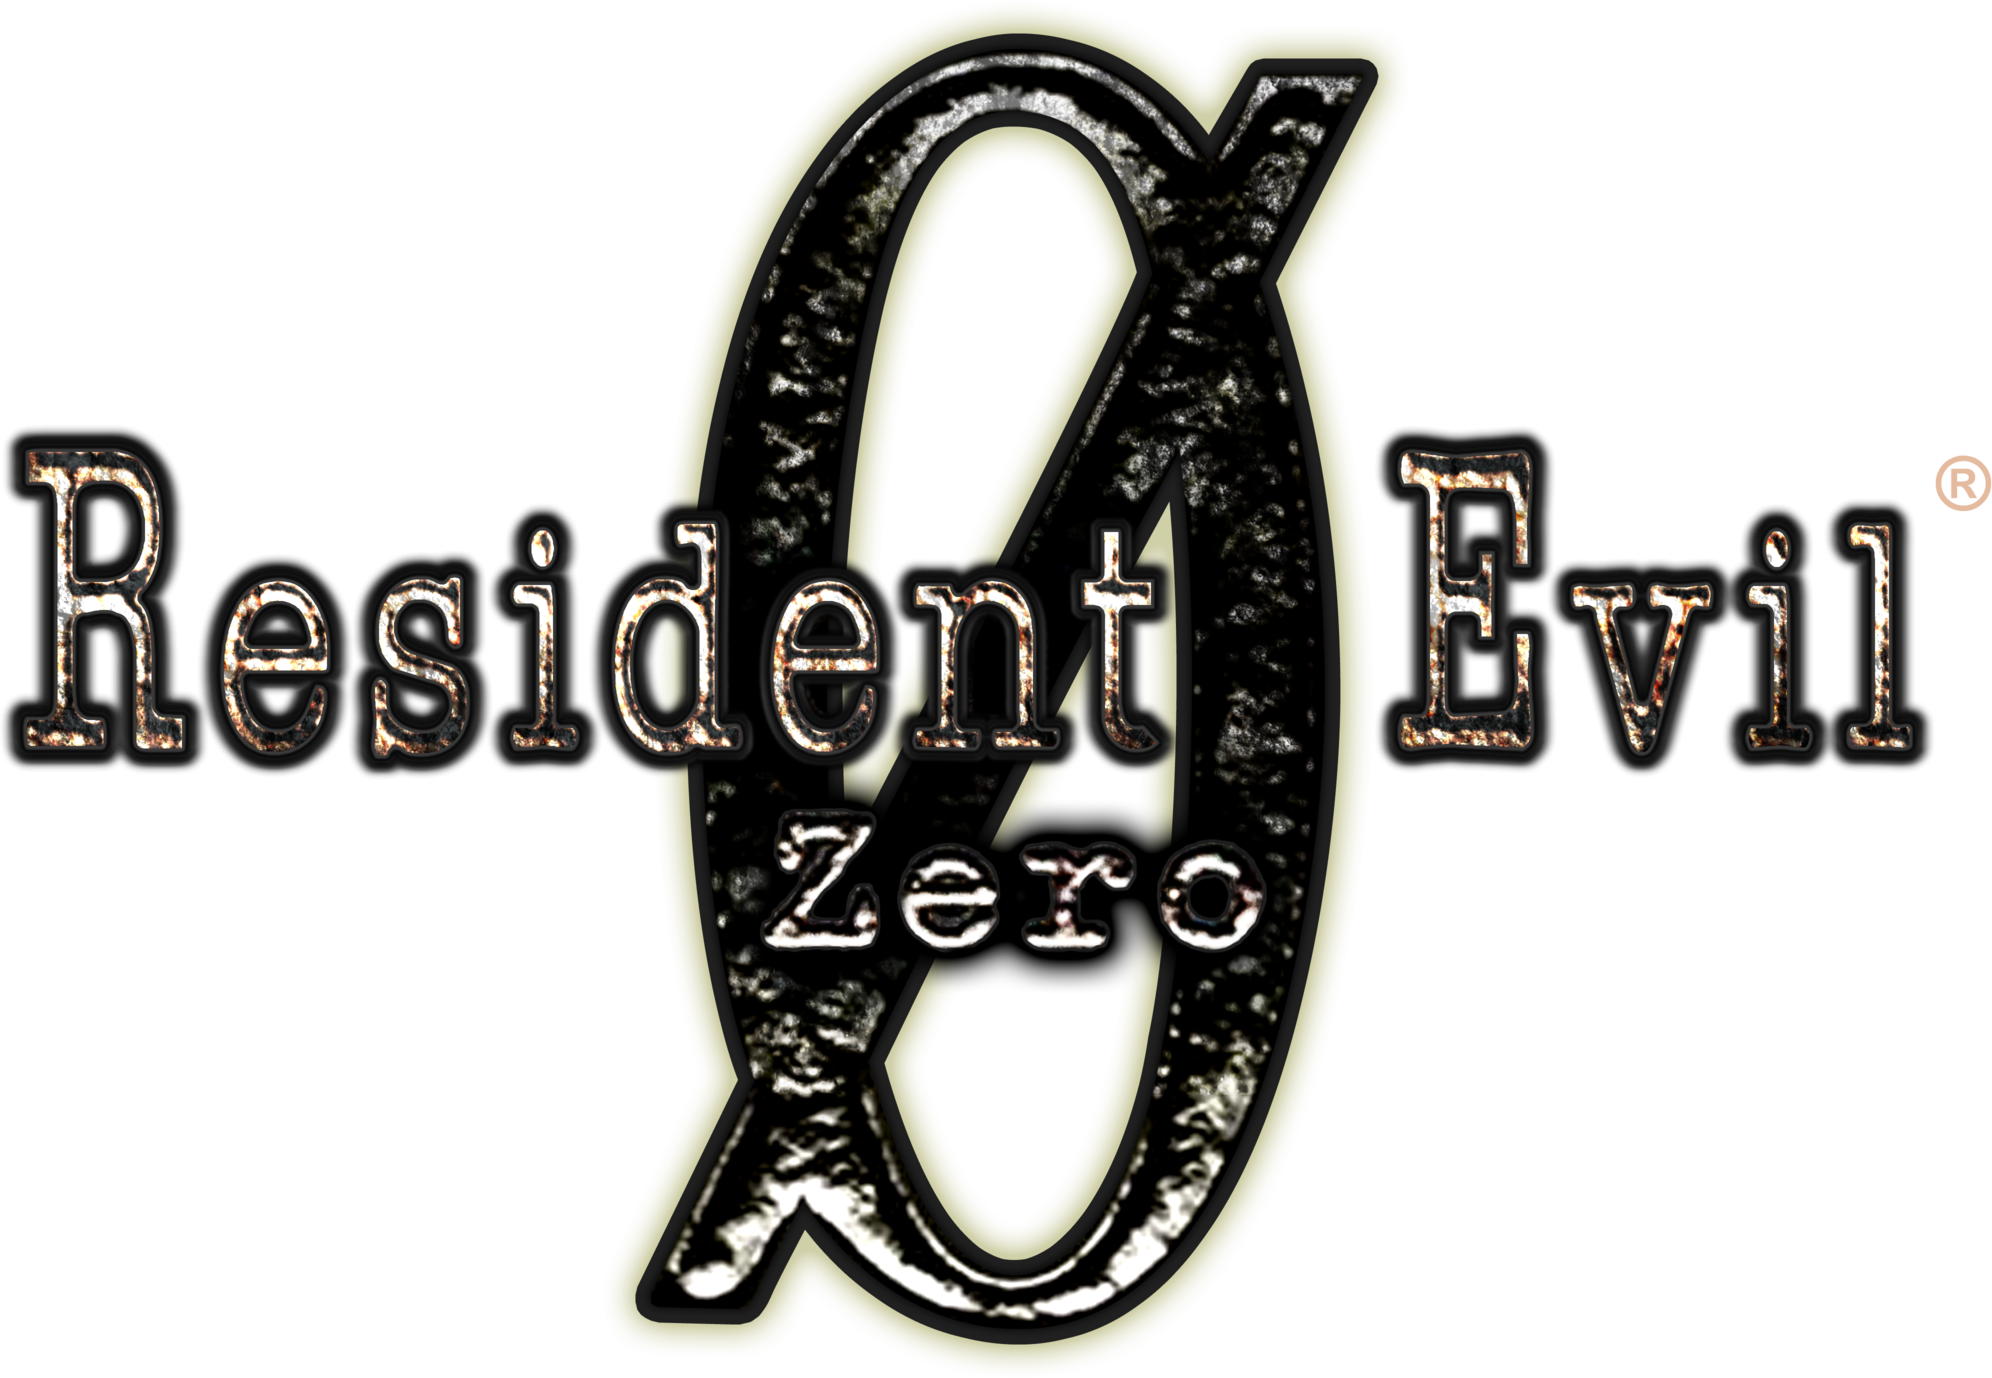 Resident Evil 5 - VGMdb